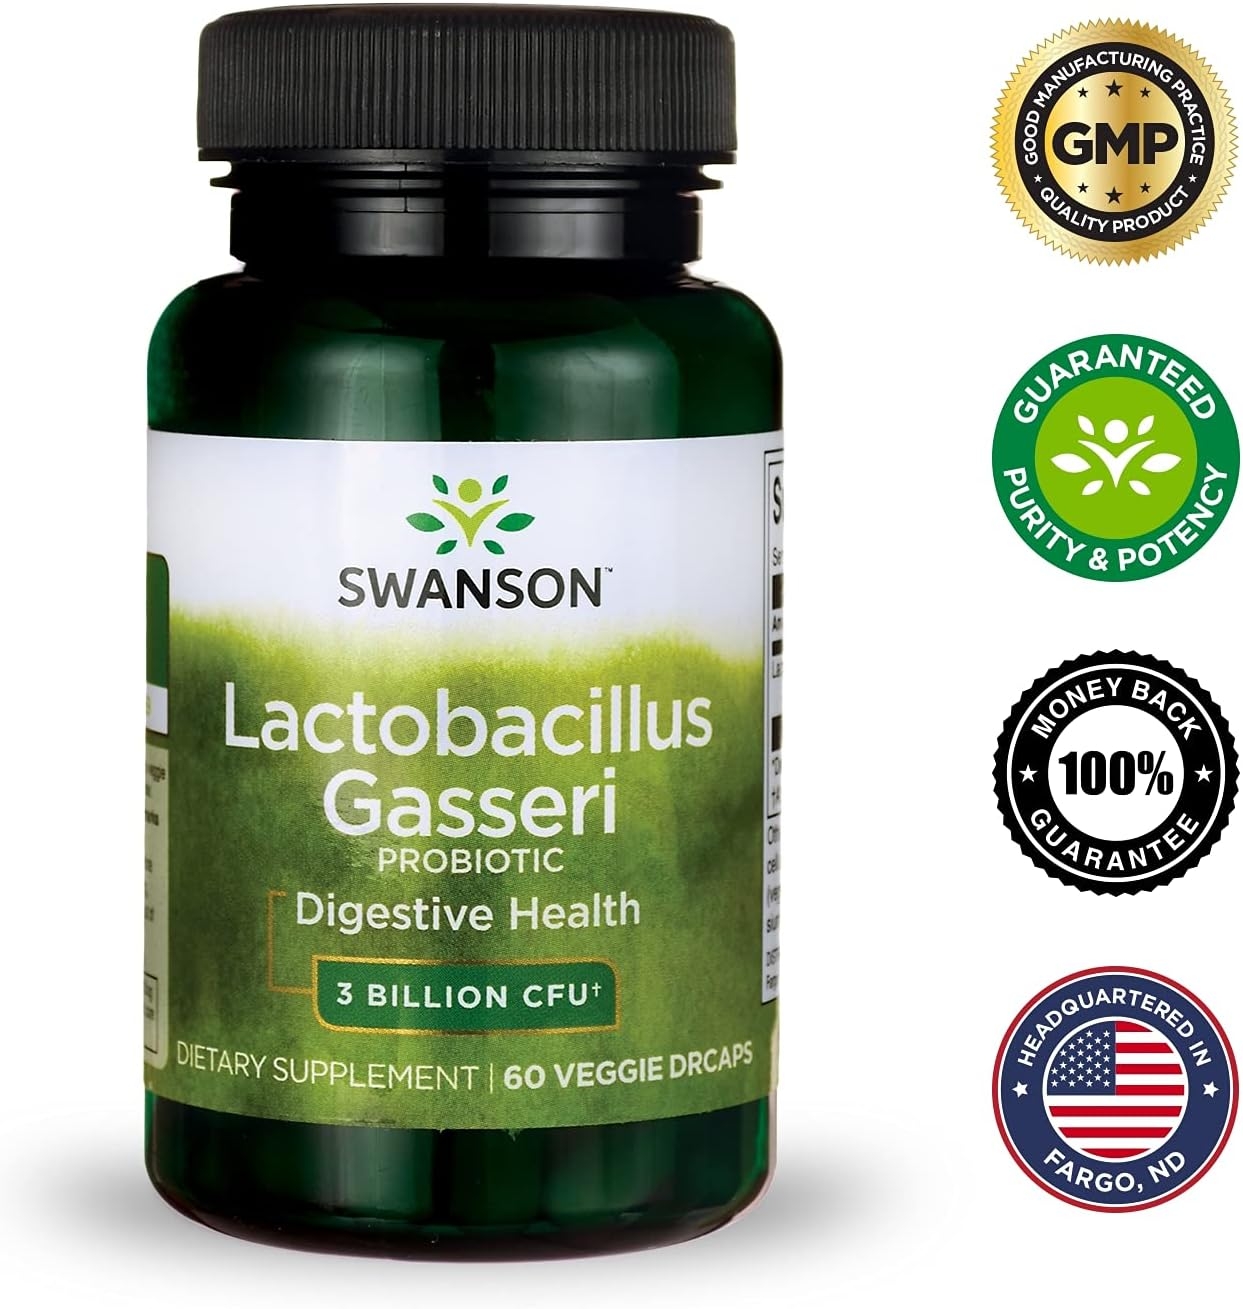 Swanson Lactobacillus Gasseri - Probiotic Supplement Supporting Digestive Health with 3 Billion CFU - Design-Release Satiety & Fat Metabolism Support - (60 Veggie Capsules)